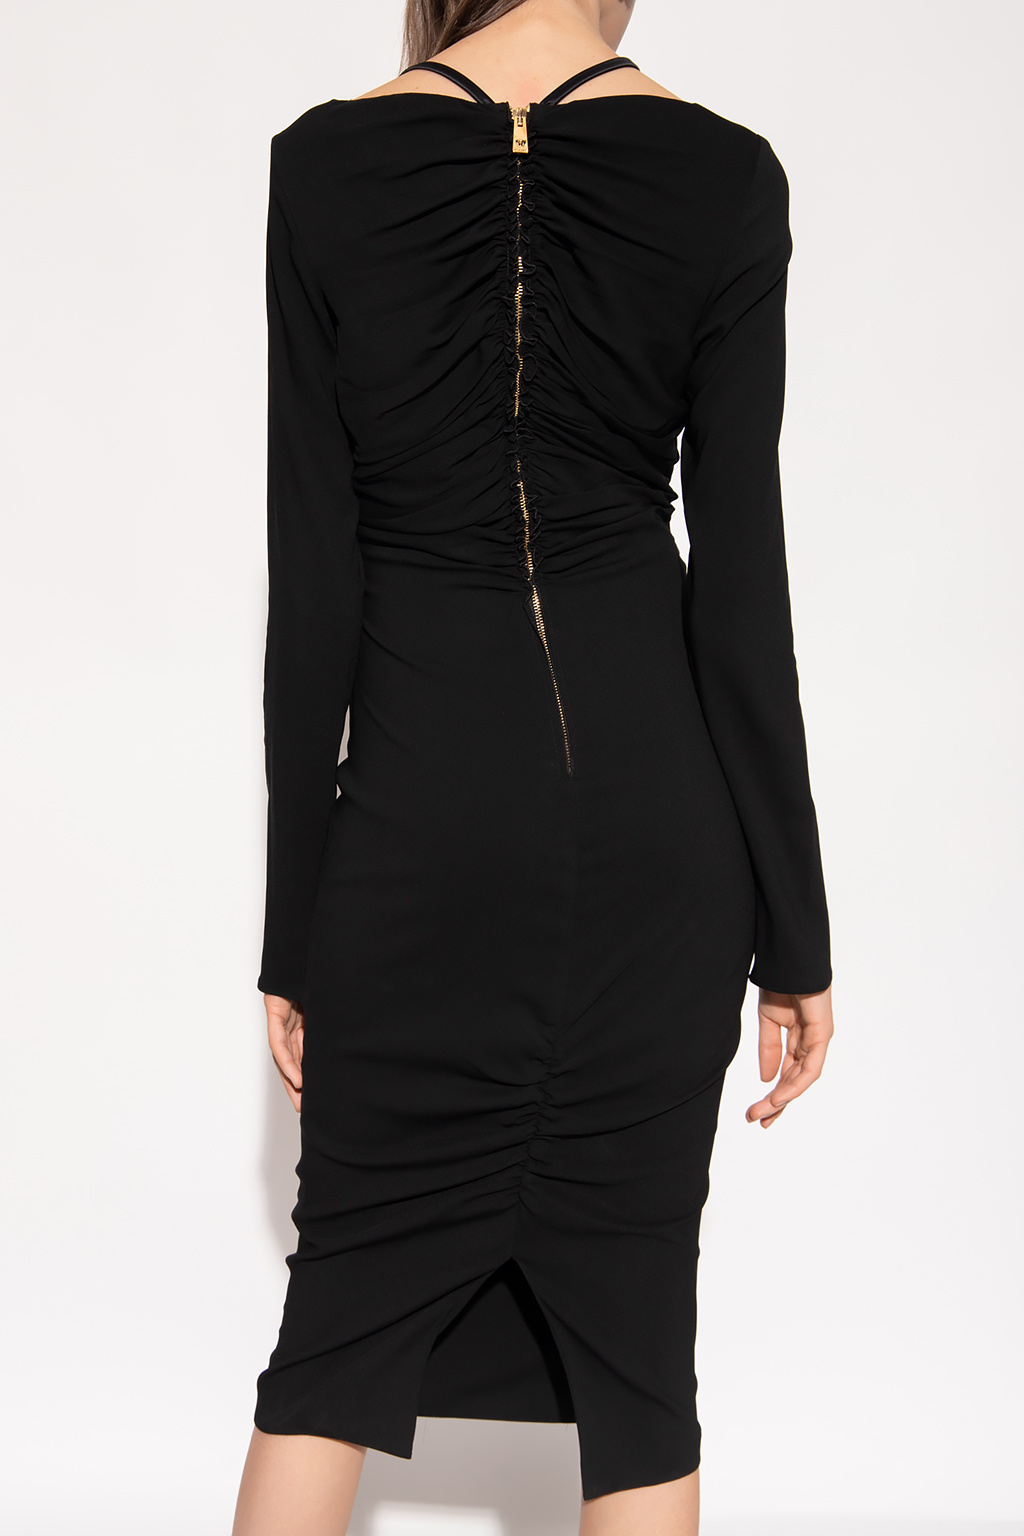 Versace Bodycon dress